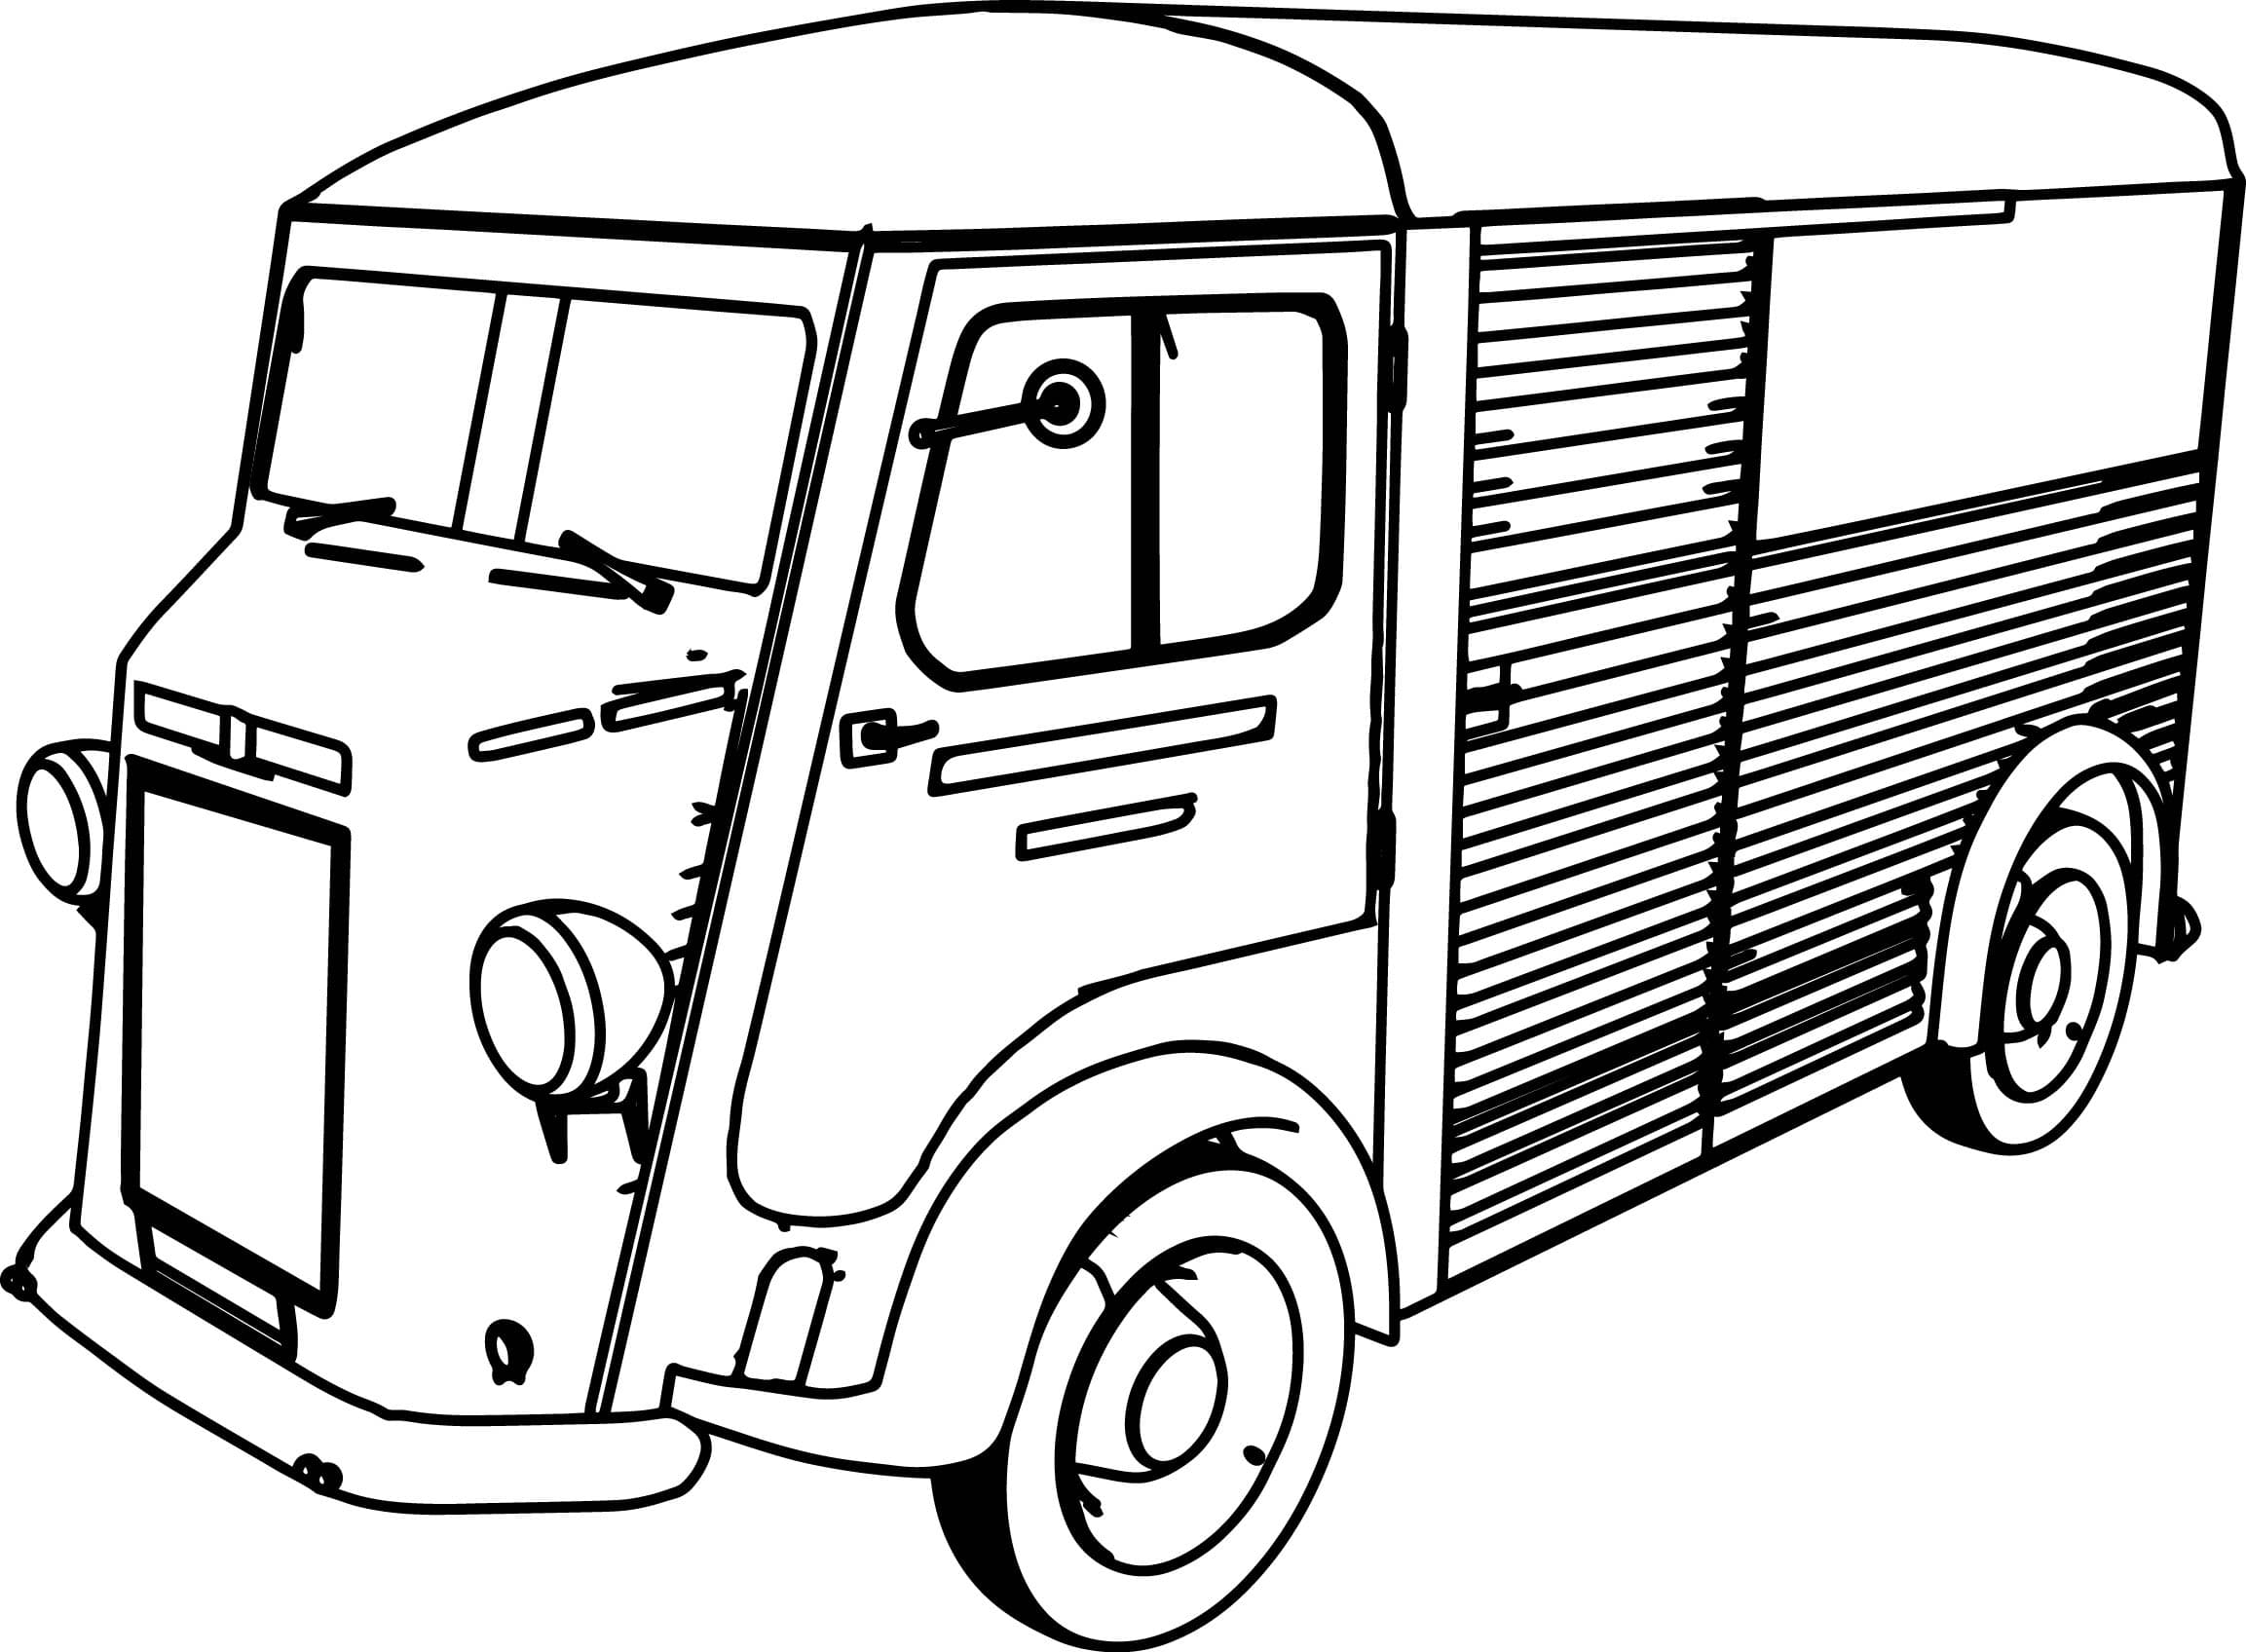 Раскраска для ребенка фургон